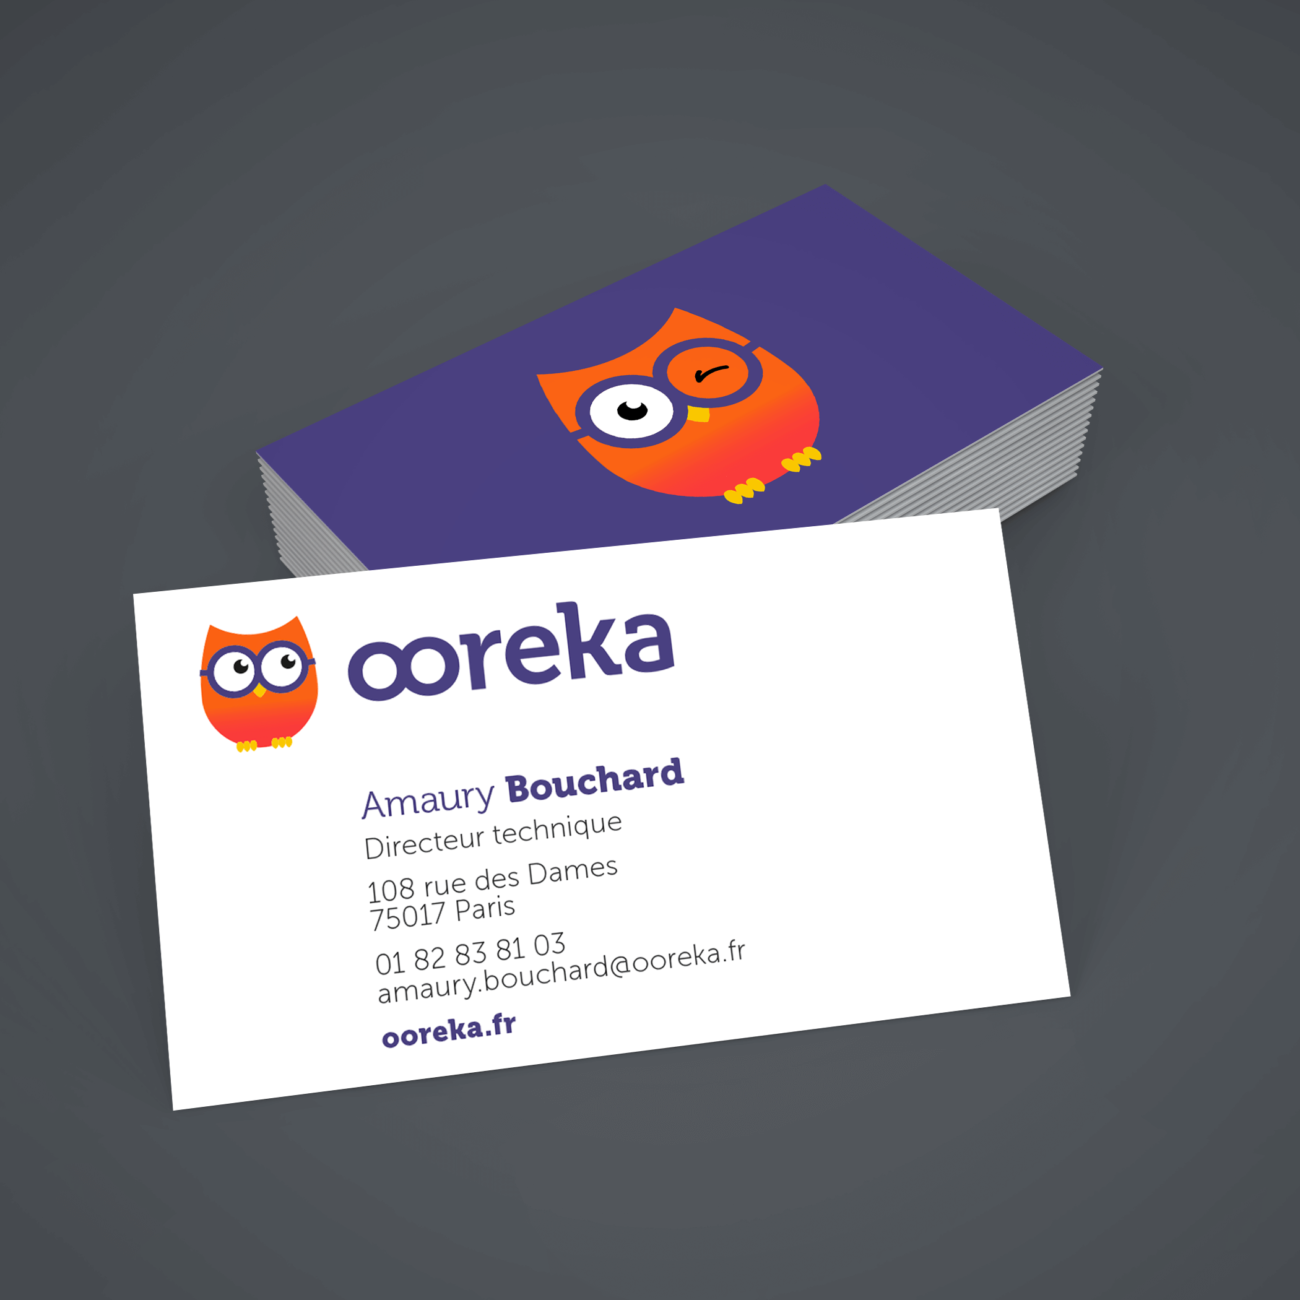 Ooreka’s brand design